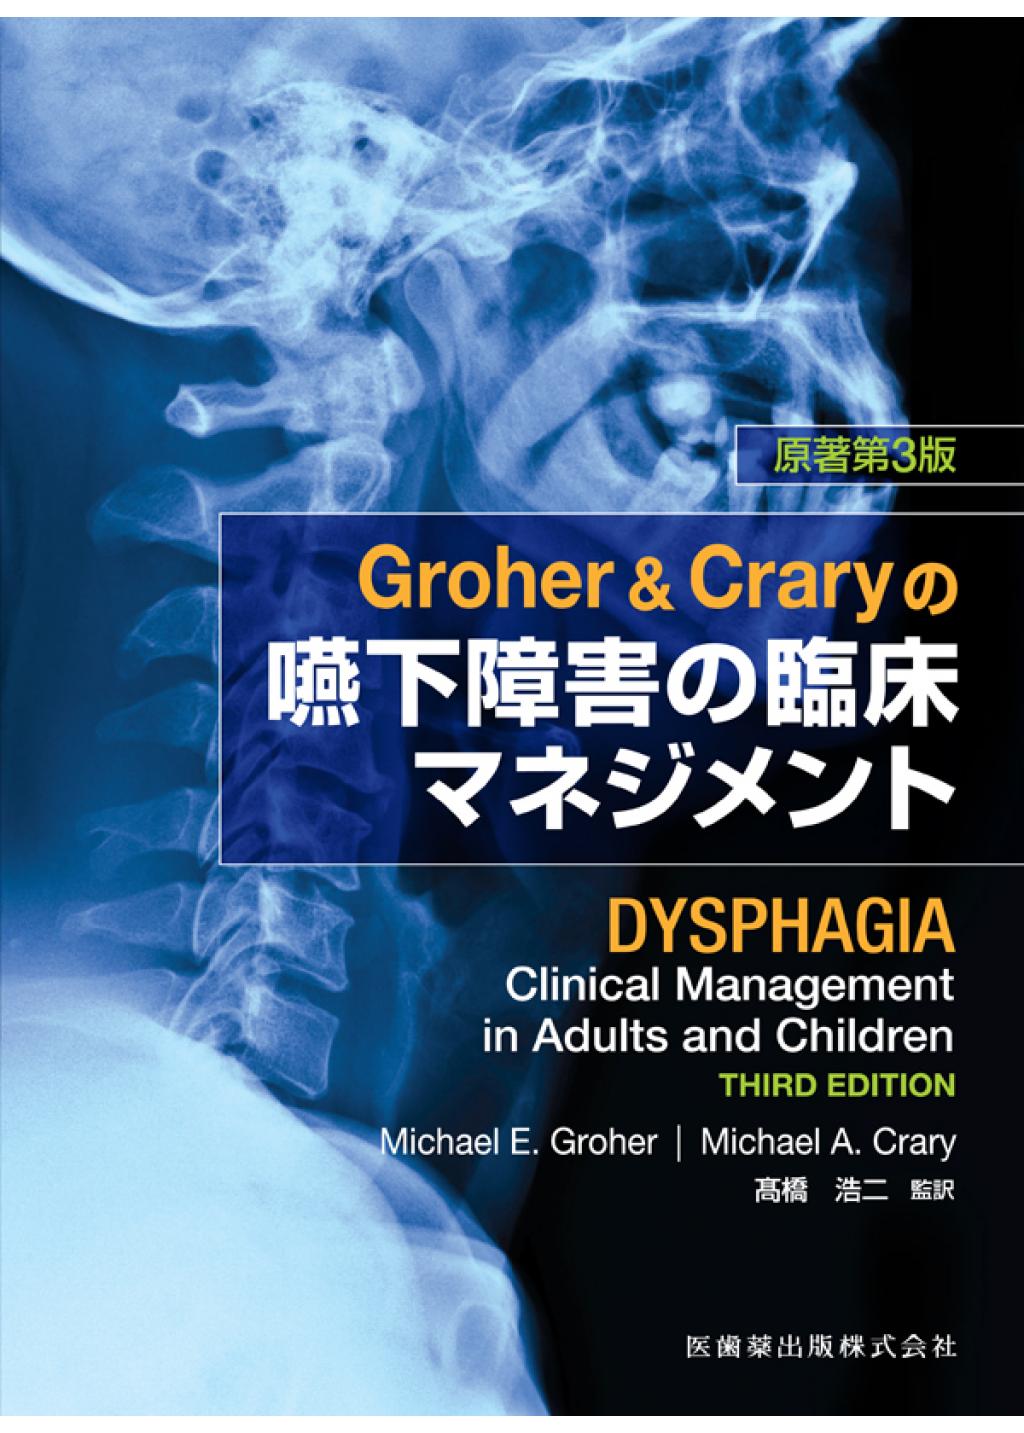 Groher　原著第3版の購入ならWHITE　Craryの嚥下障害の臨床マネジメント　CROSS